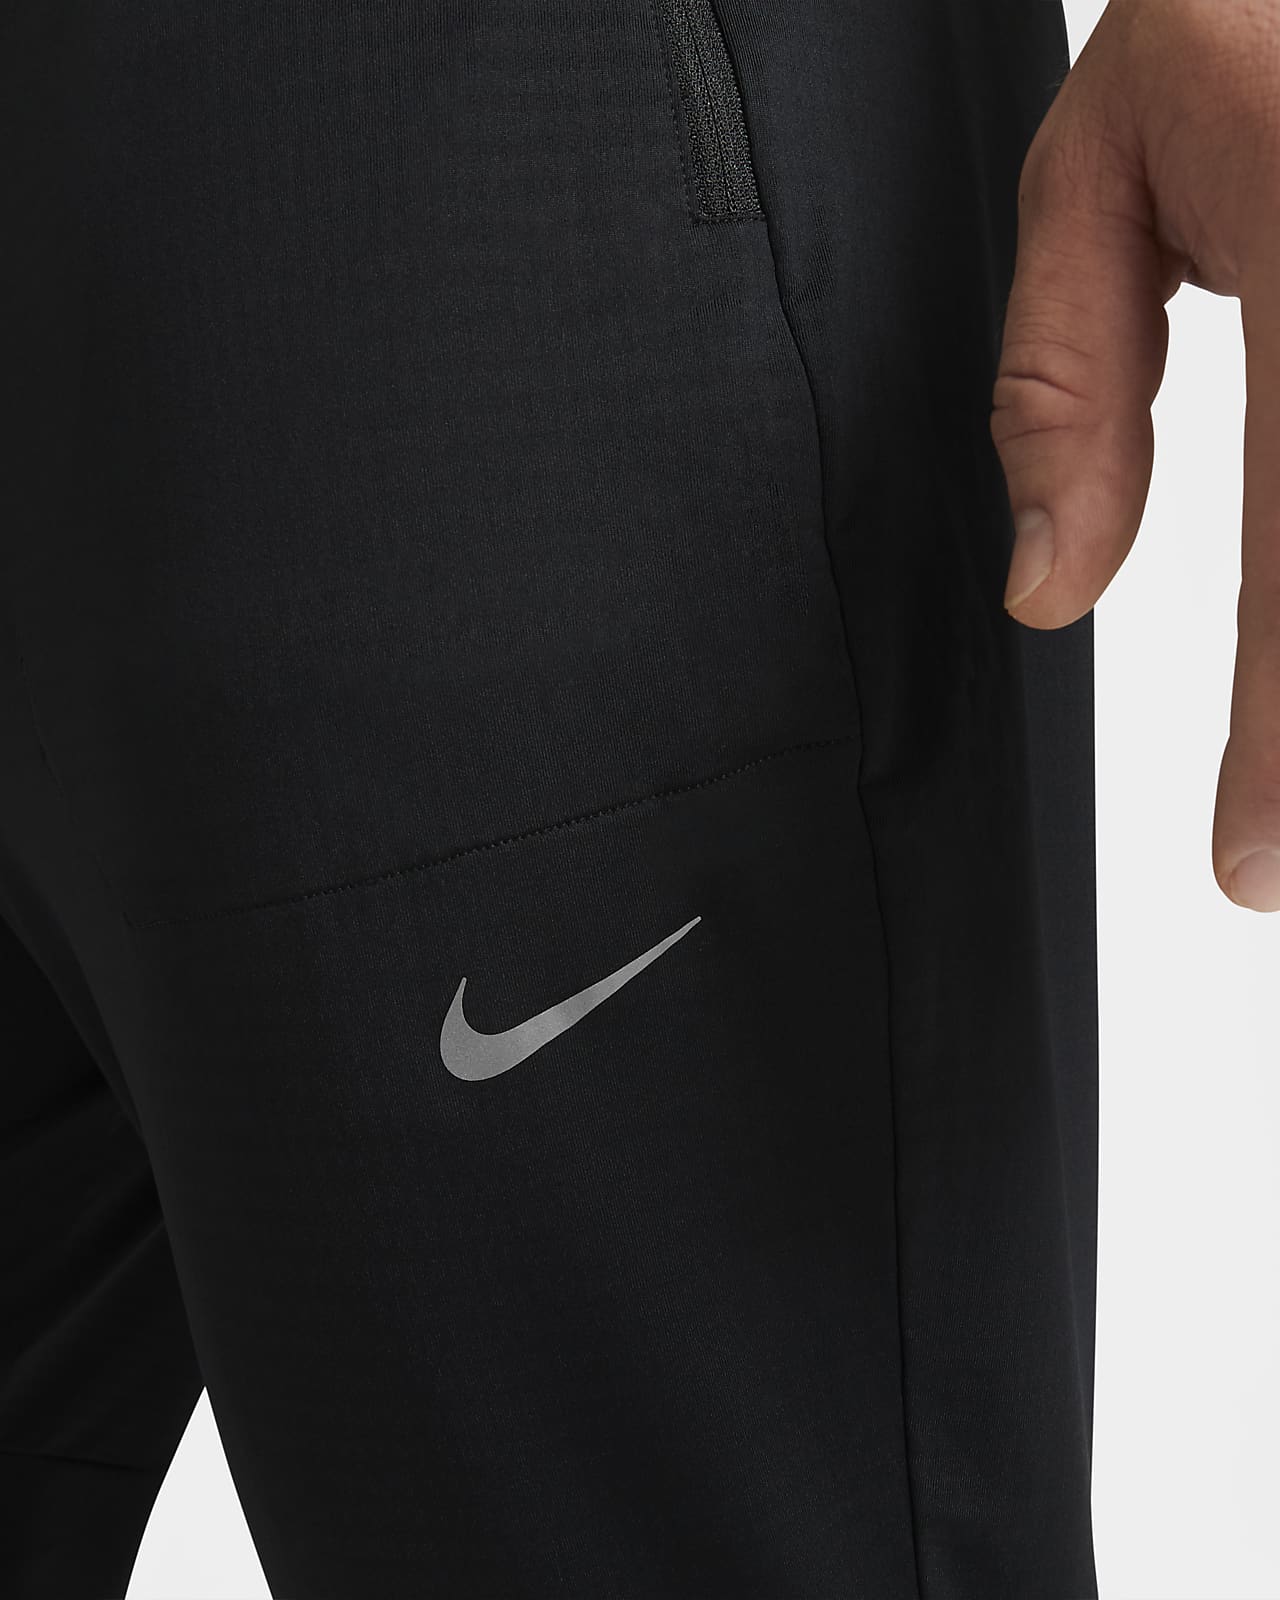 Nike公式 ナイキ フェノム エリート メンズ ニット ランニングパンツ オンラインストア 通販サイト